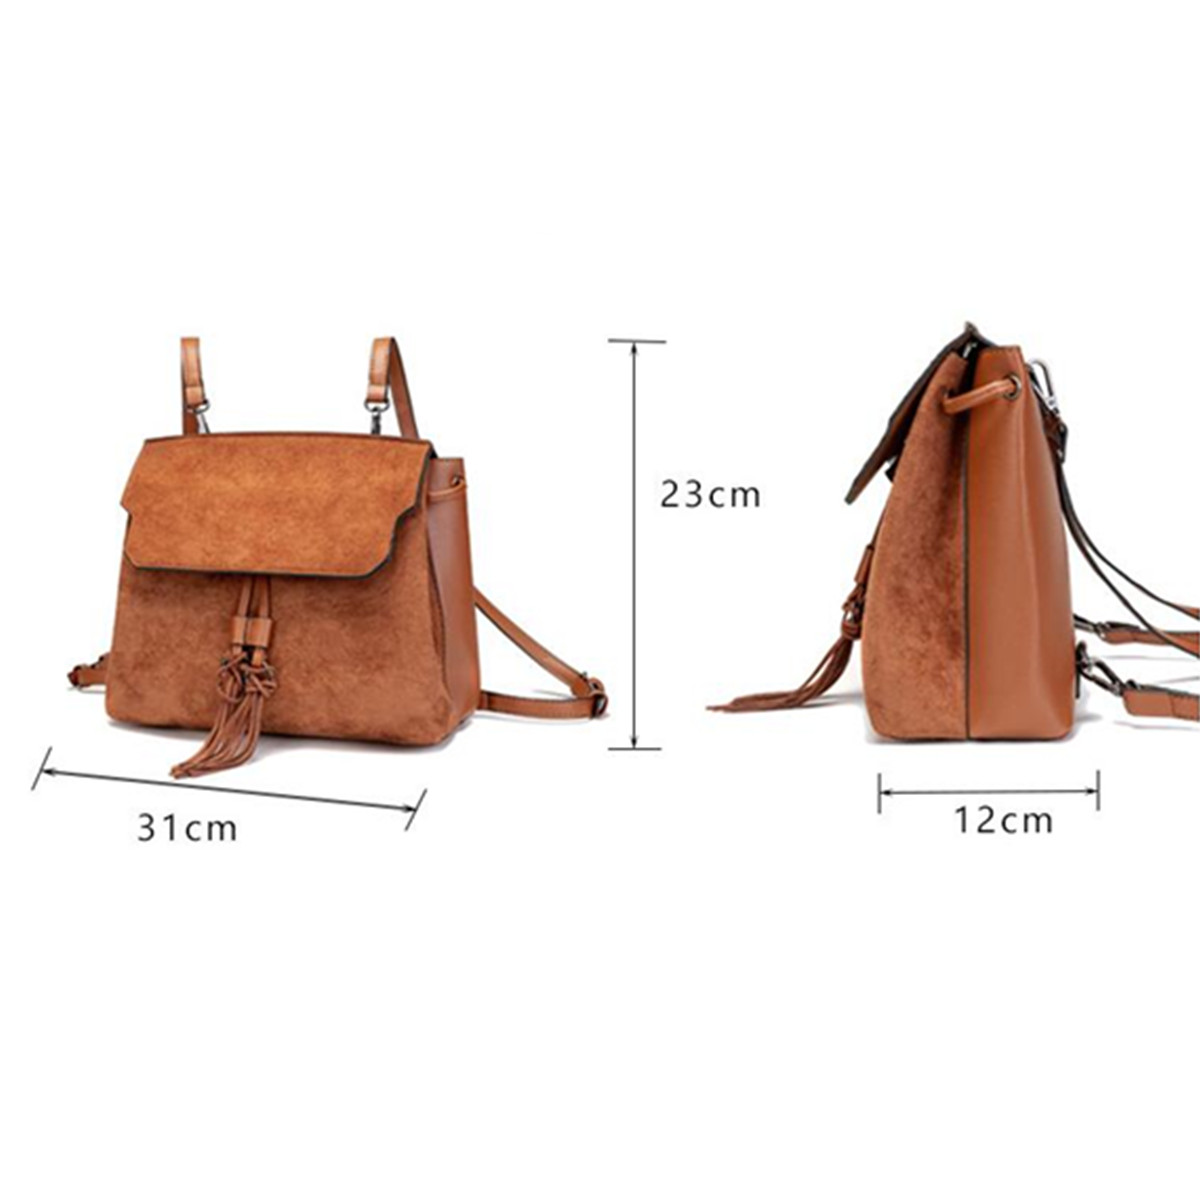 Outdoor-PU-Leather-Backpack-Women-Tassel-Handbag-School-Bag-Travel-Rucksack-1627681-2